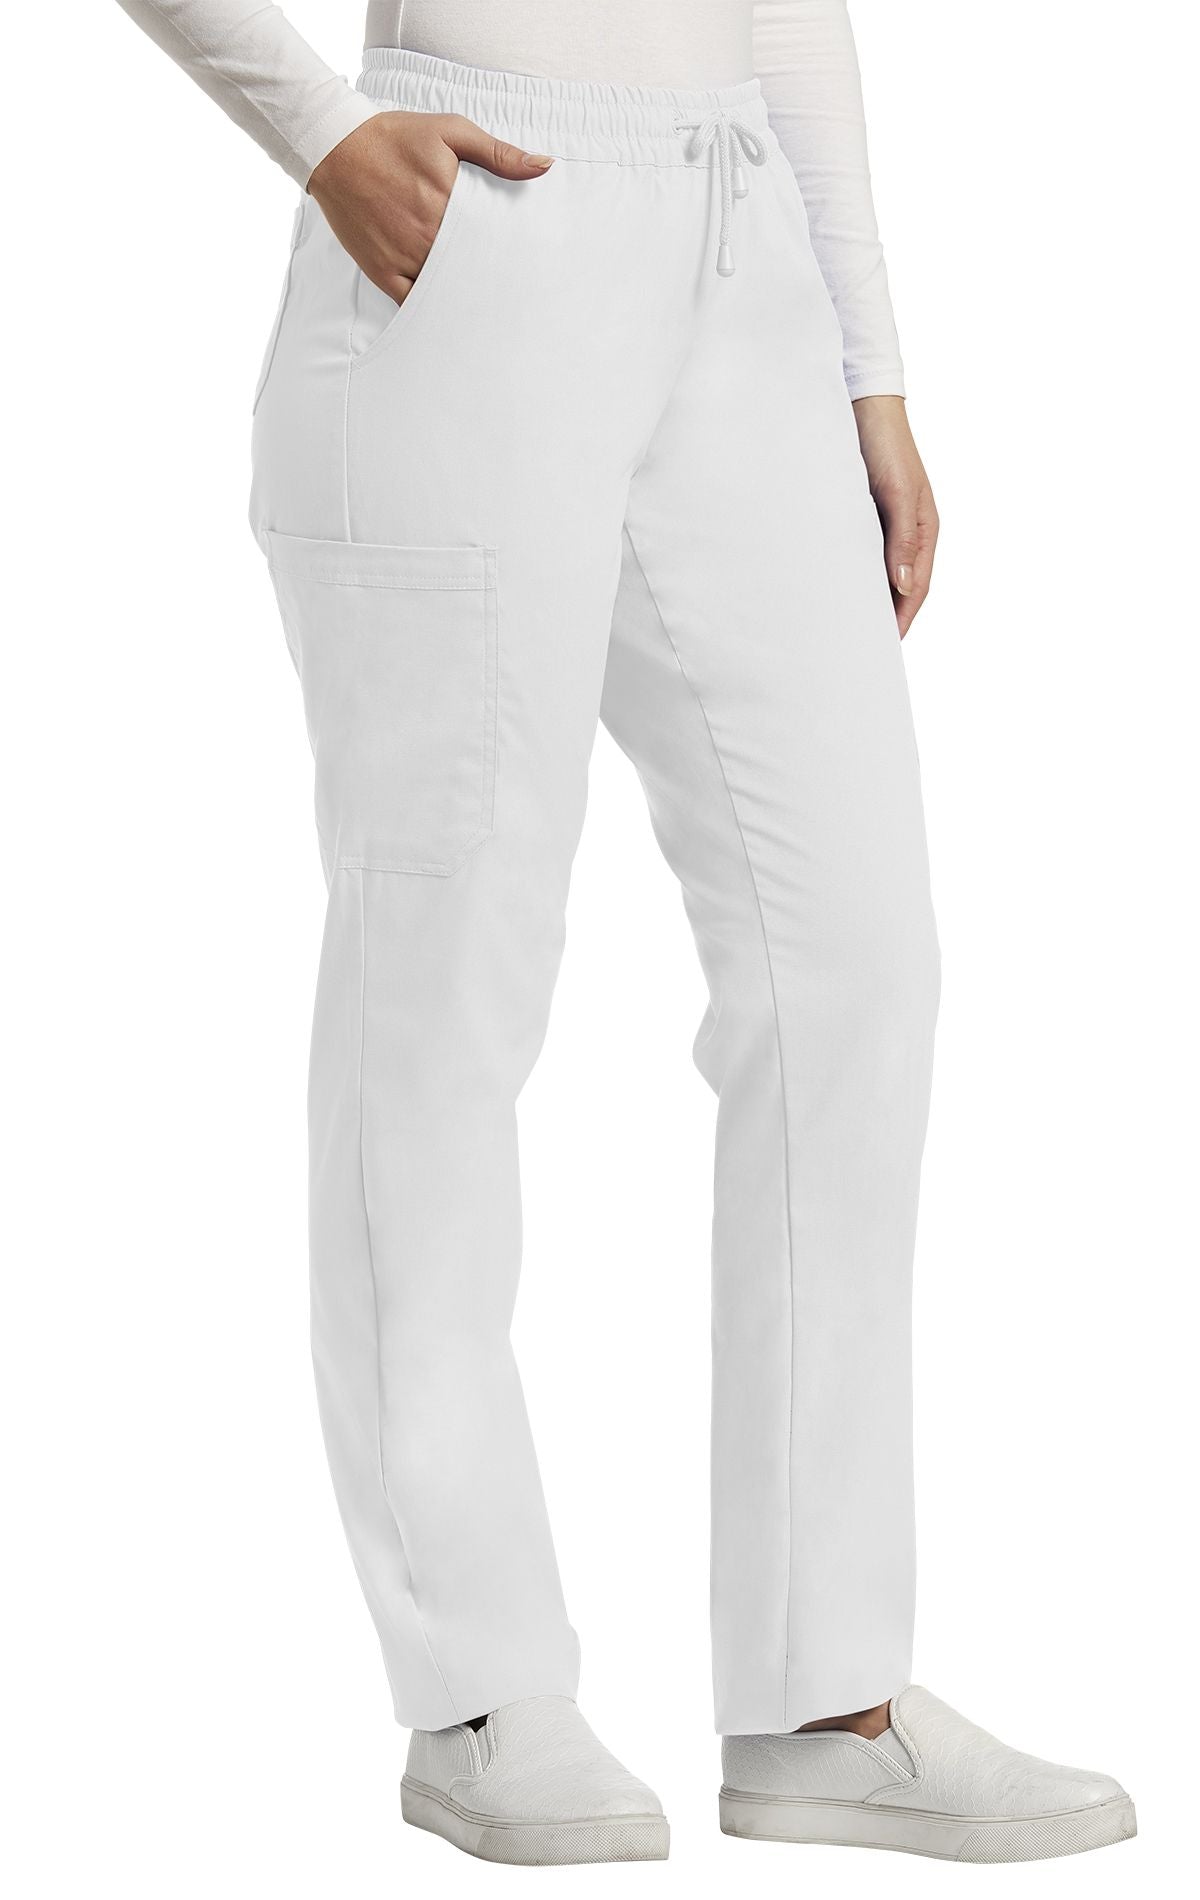 Pantalon médical 6 poches couleur blanc de White cross 304